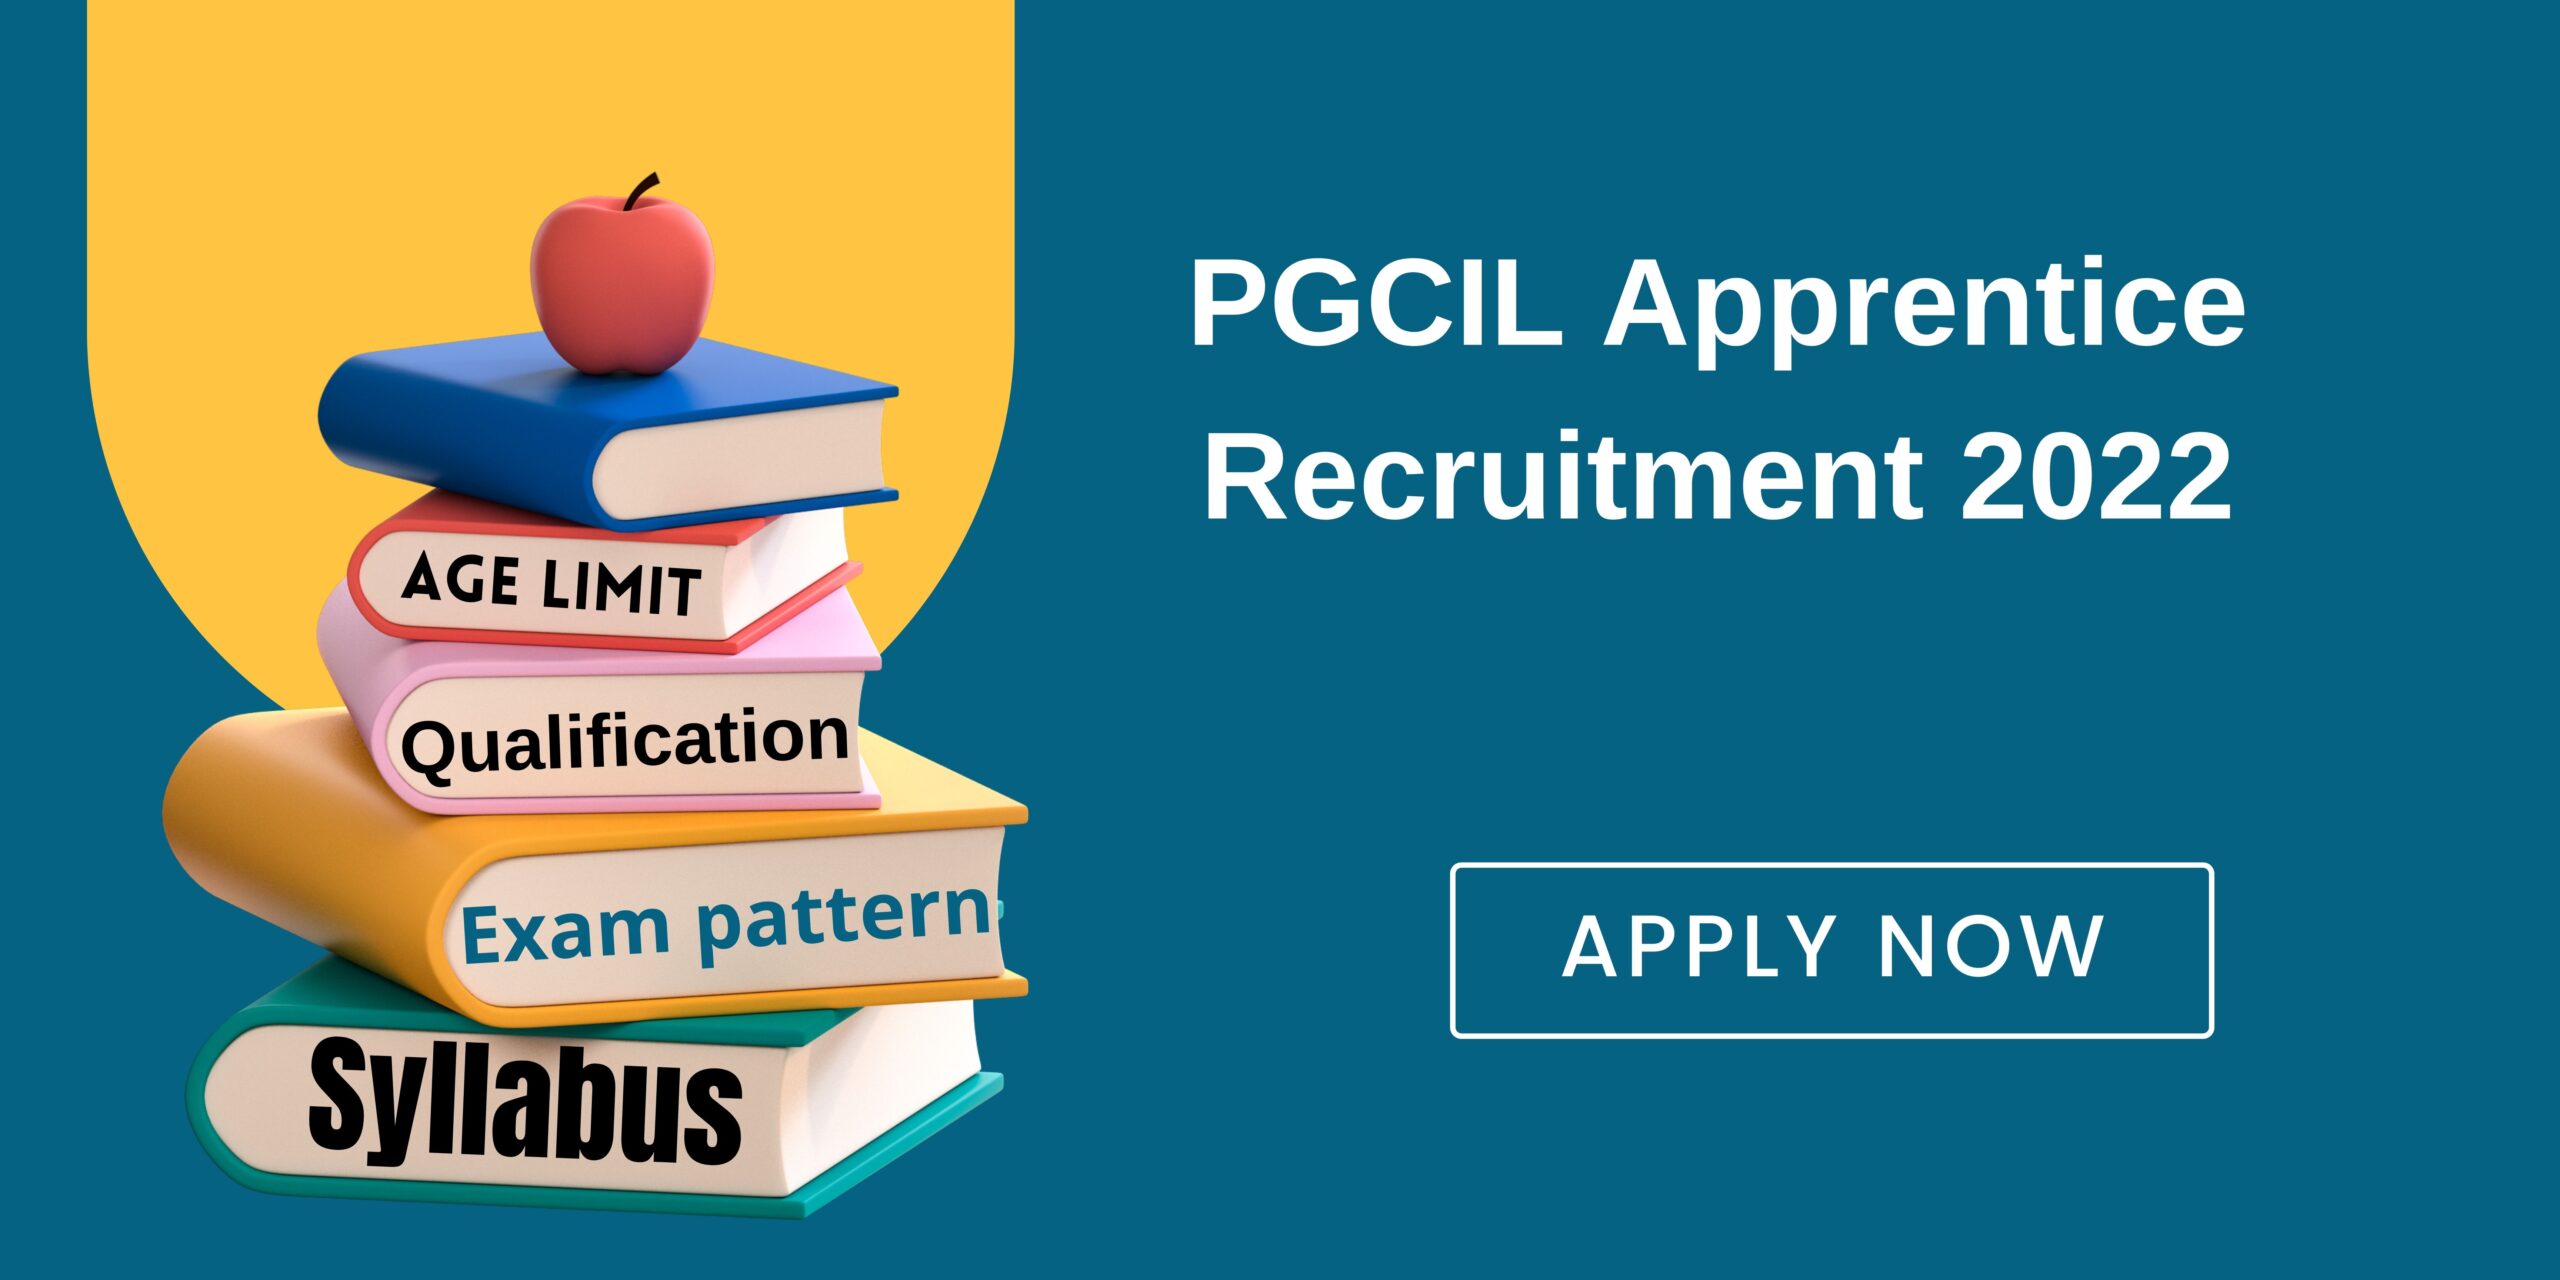 PGCIL Apprentice Recruitment 2022